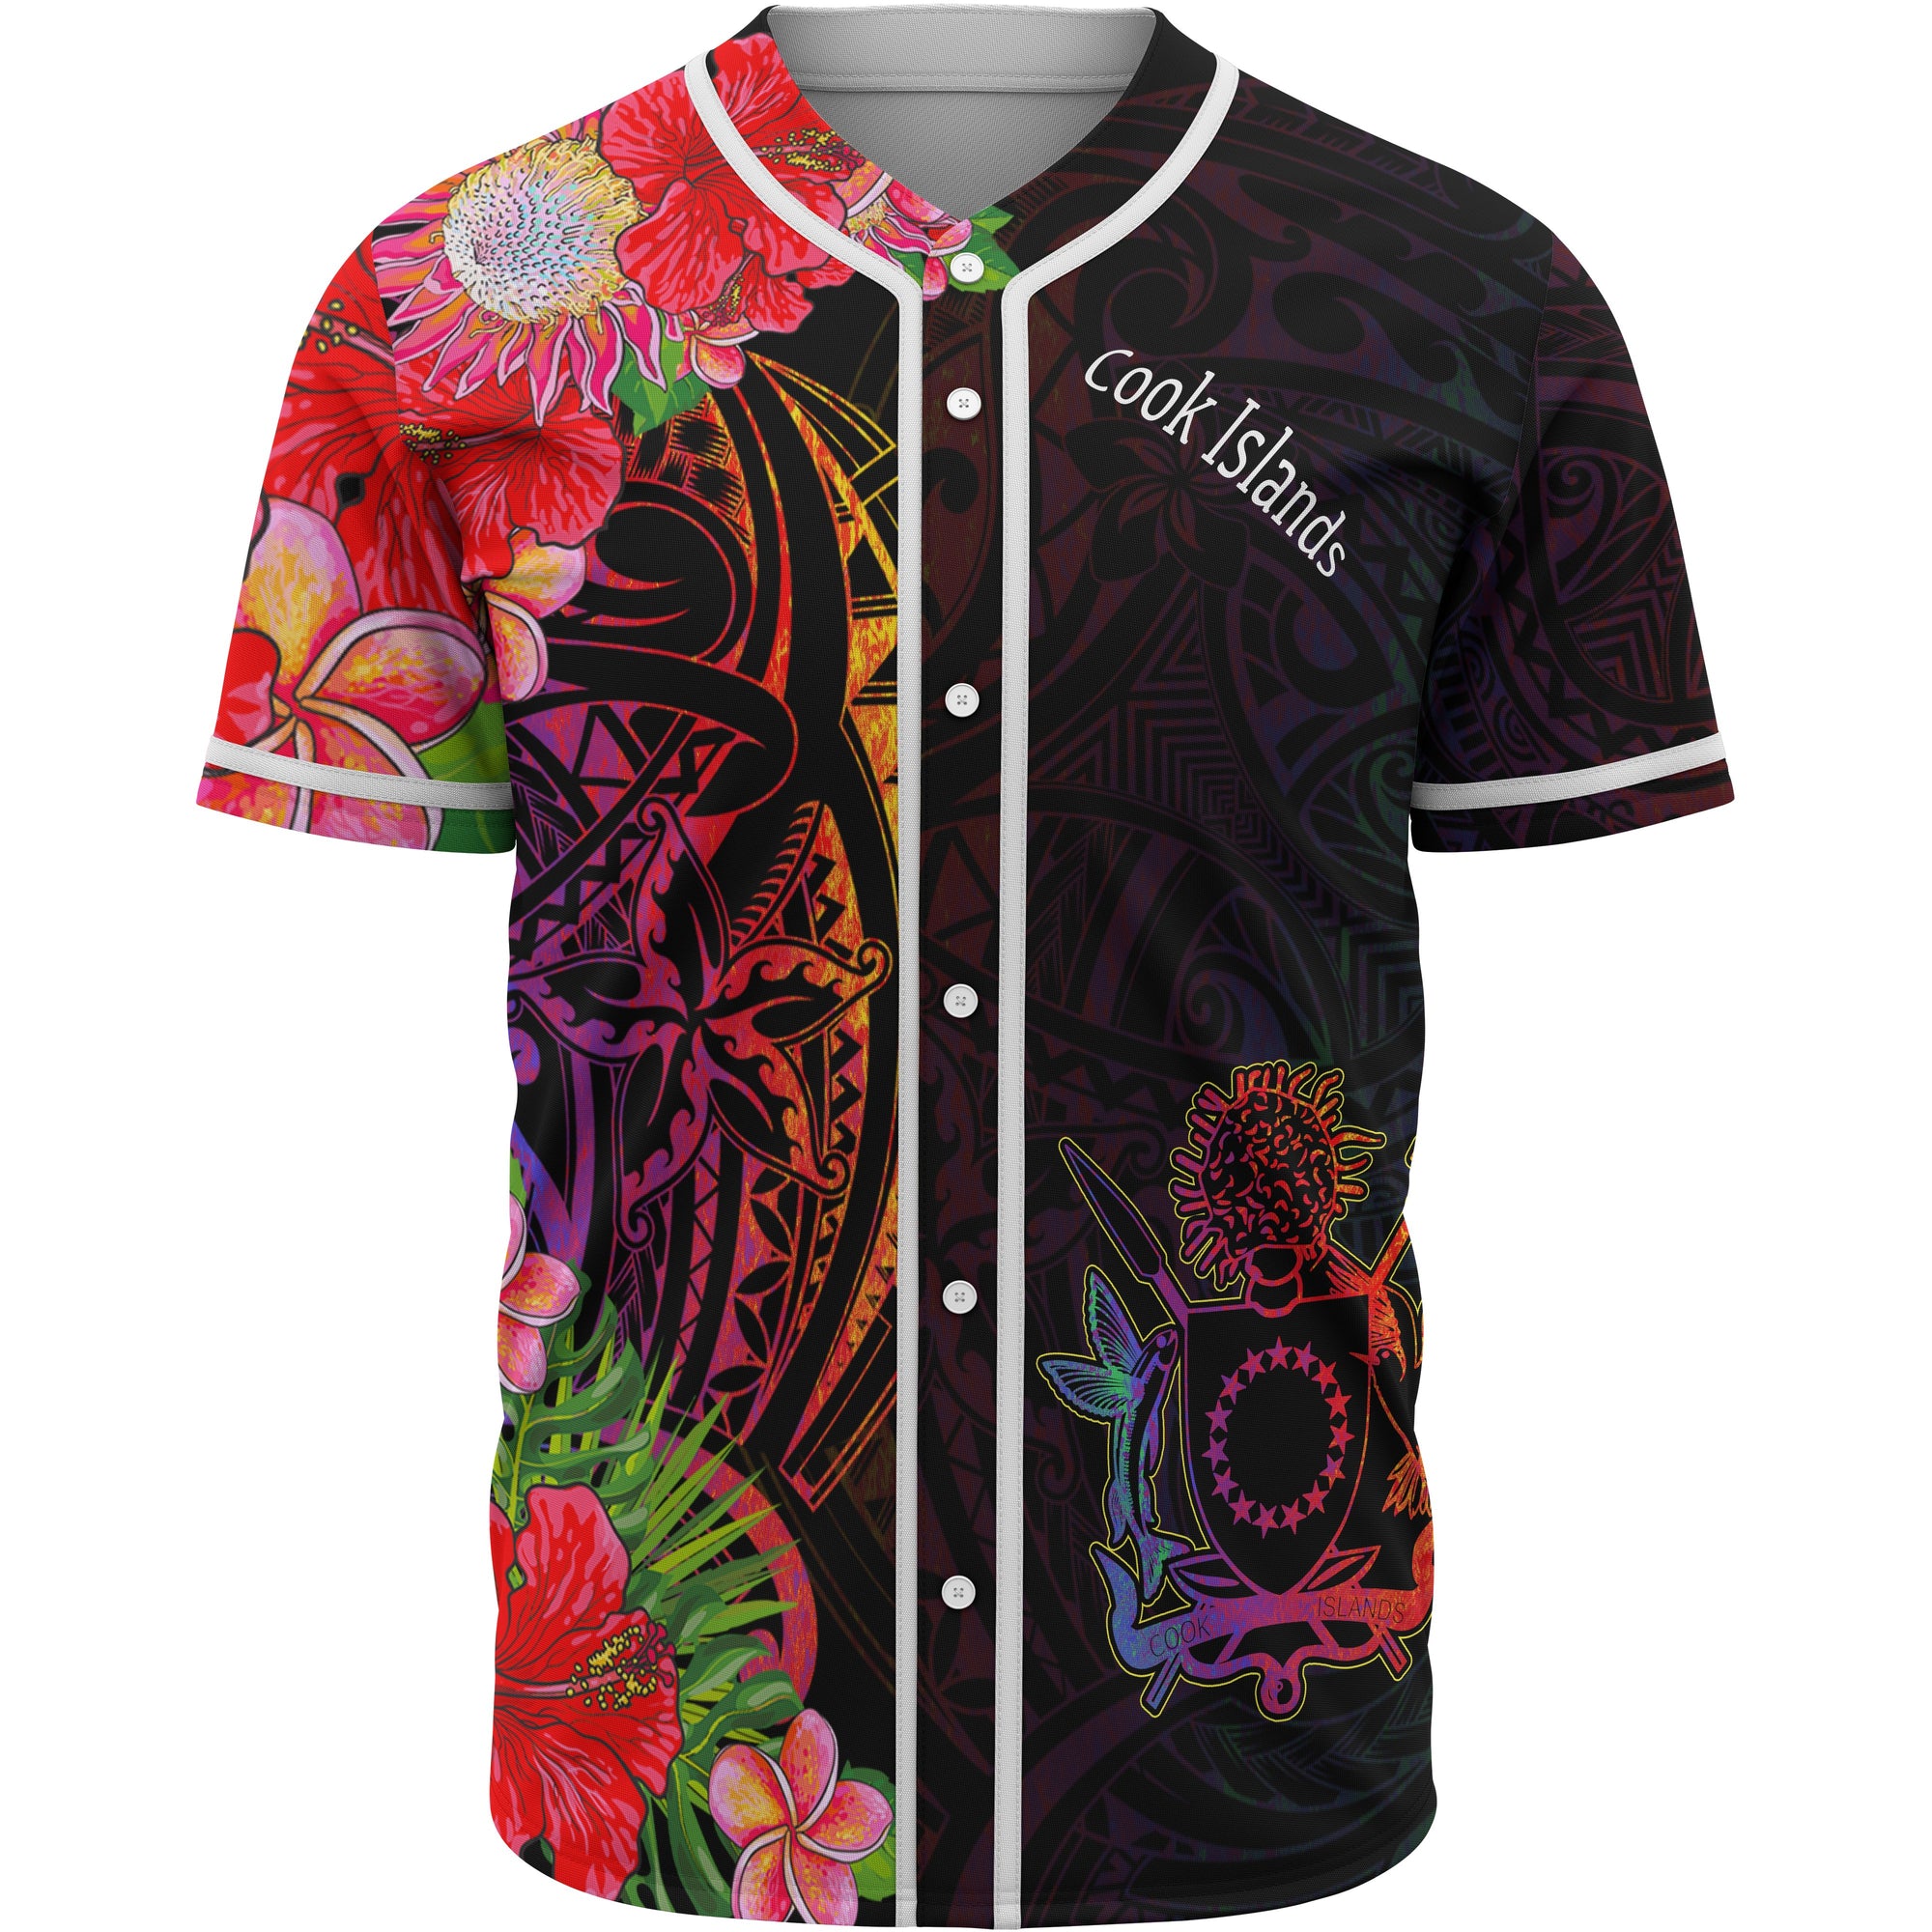 Cook Islands Baseball Shirt - Tropical Hippie Style Unisex Black - Polynesian Pride